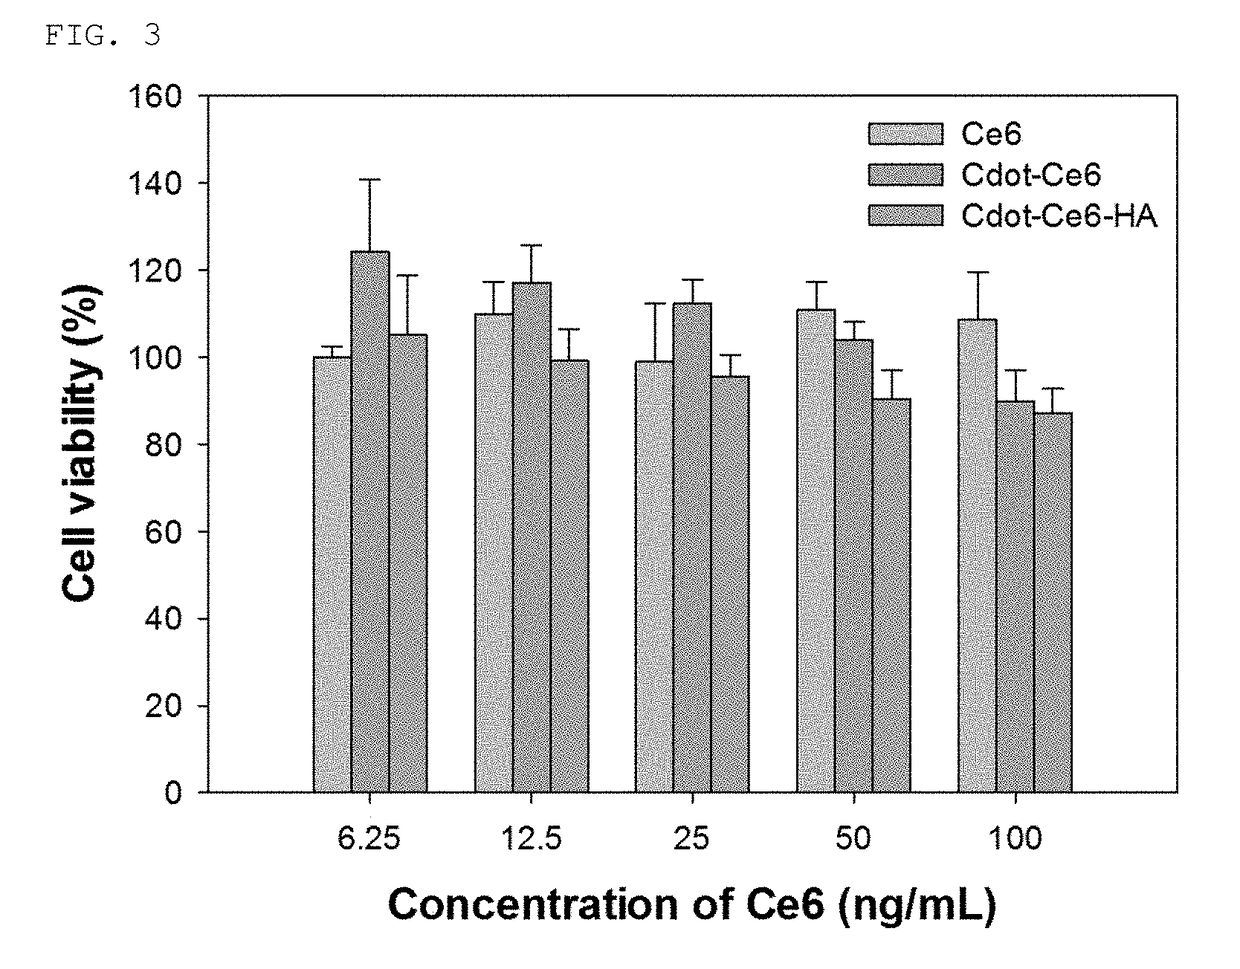 Treatment of retinitis pigmentosa using hyaluronic acid-carbon nanomaterial-photosensitizer complex